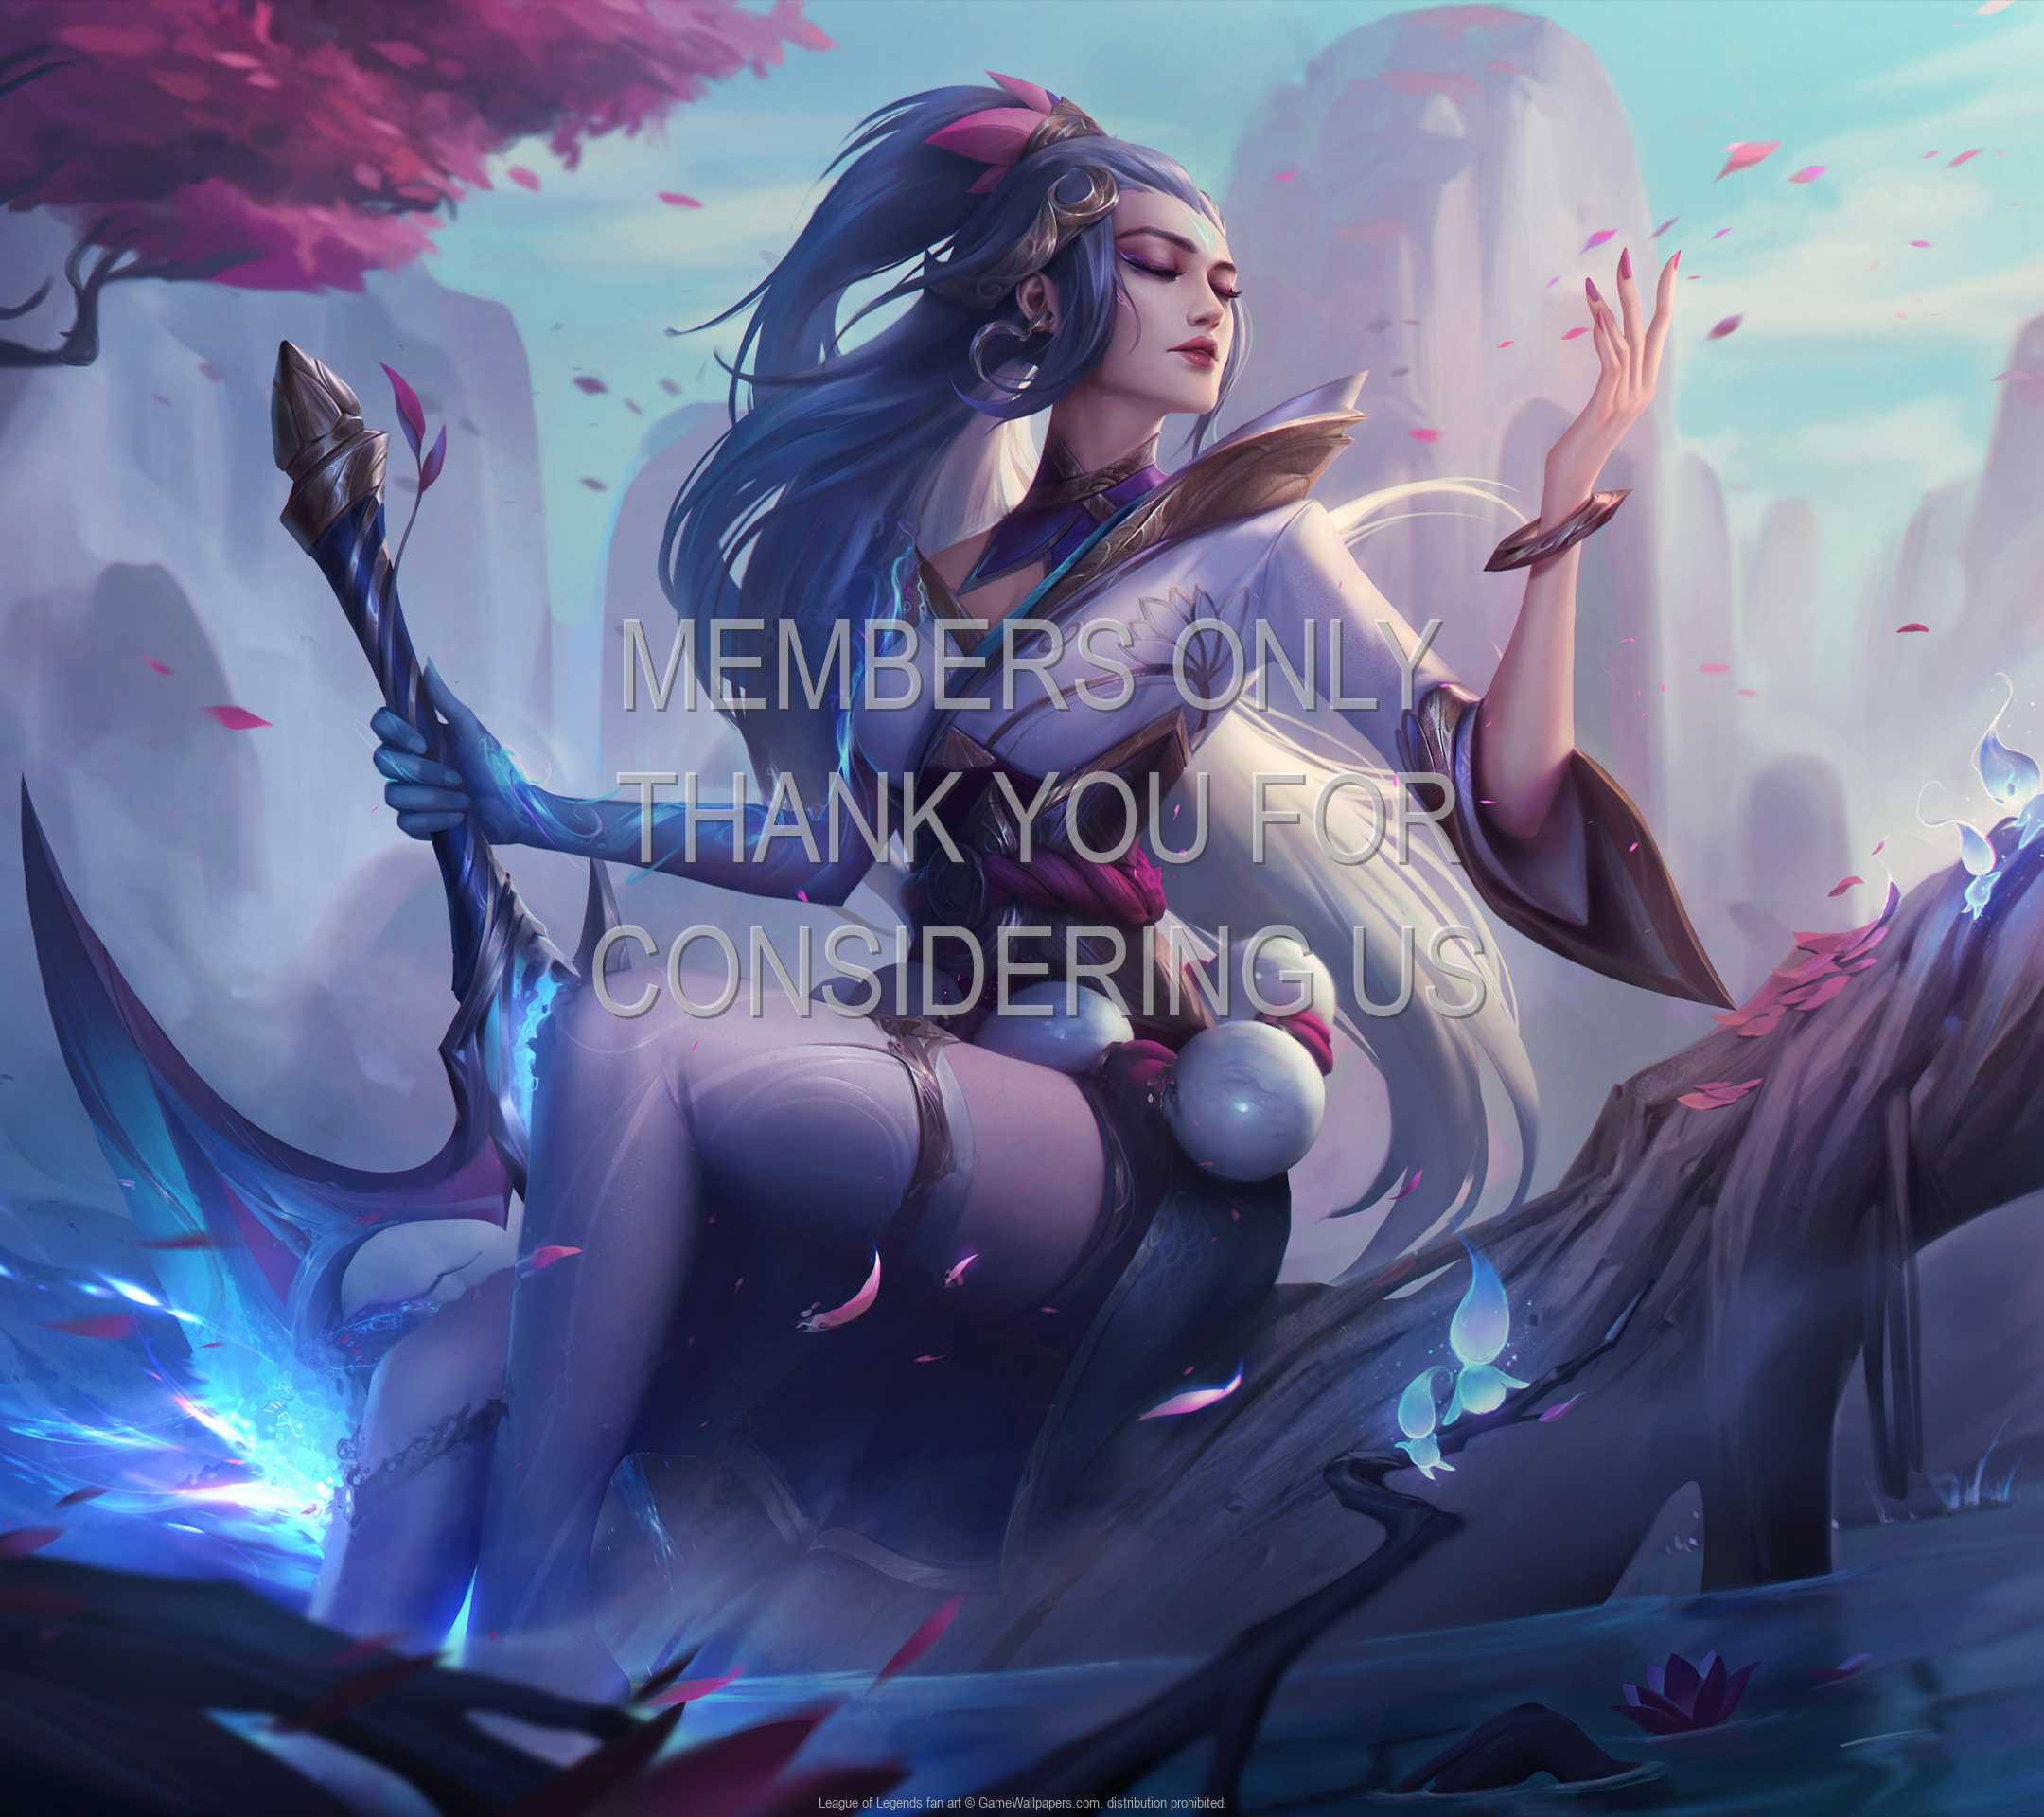 League of Legends fan art 1080p Horizontal Mobile wallpaper or background 29